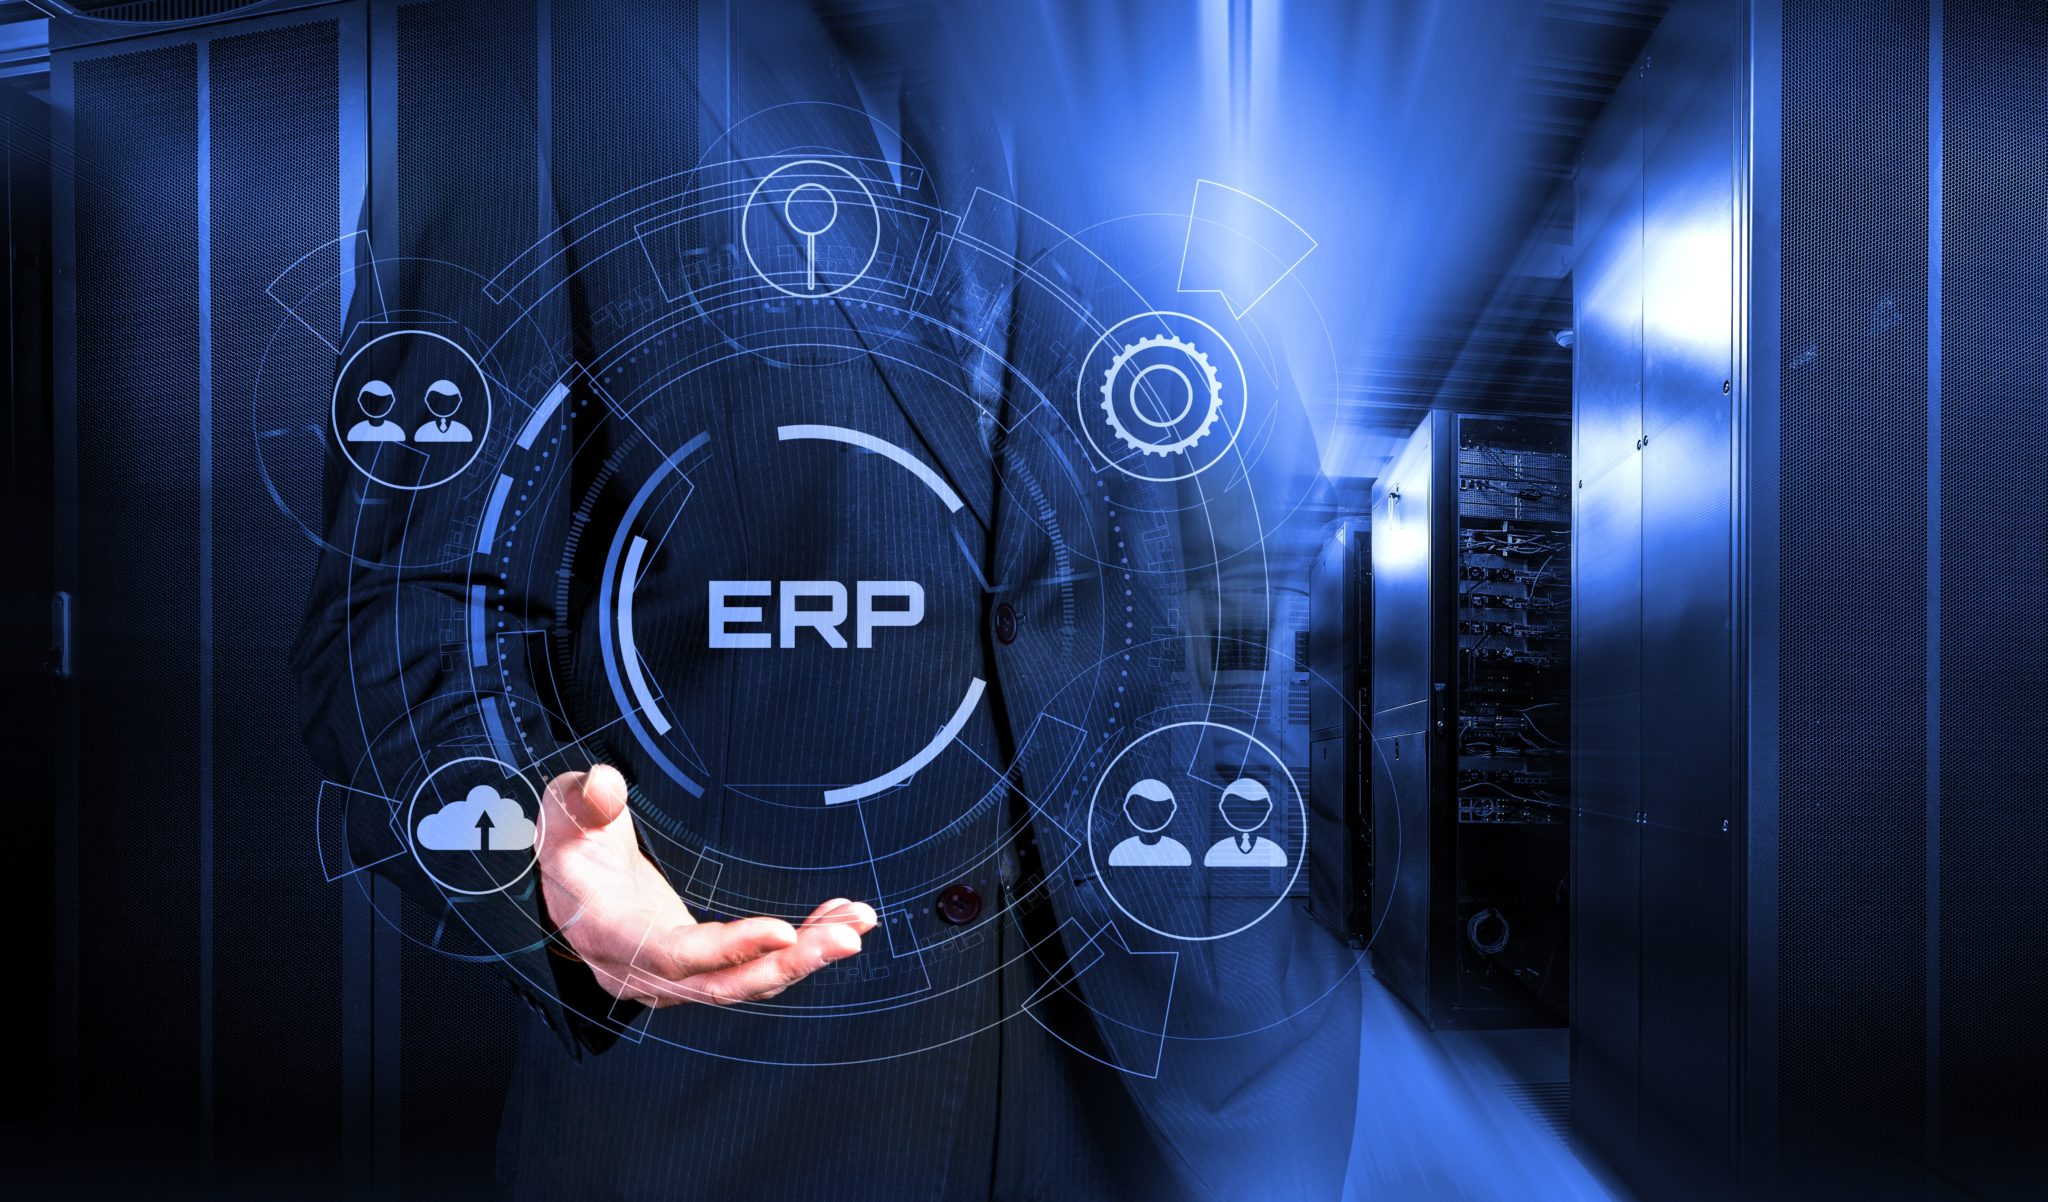 Enterprise Resource Planning ERP system management and technology 3d render